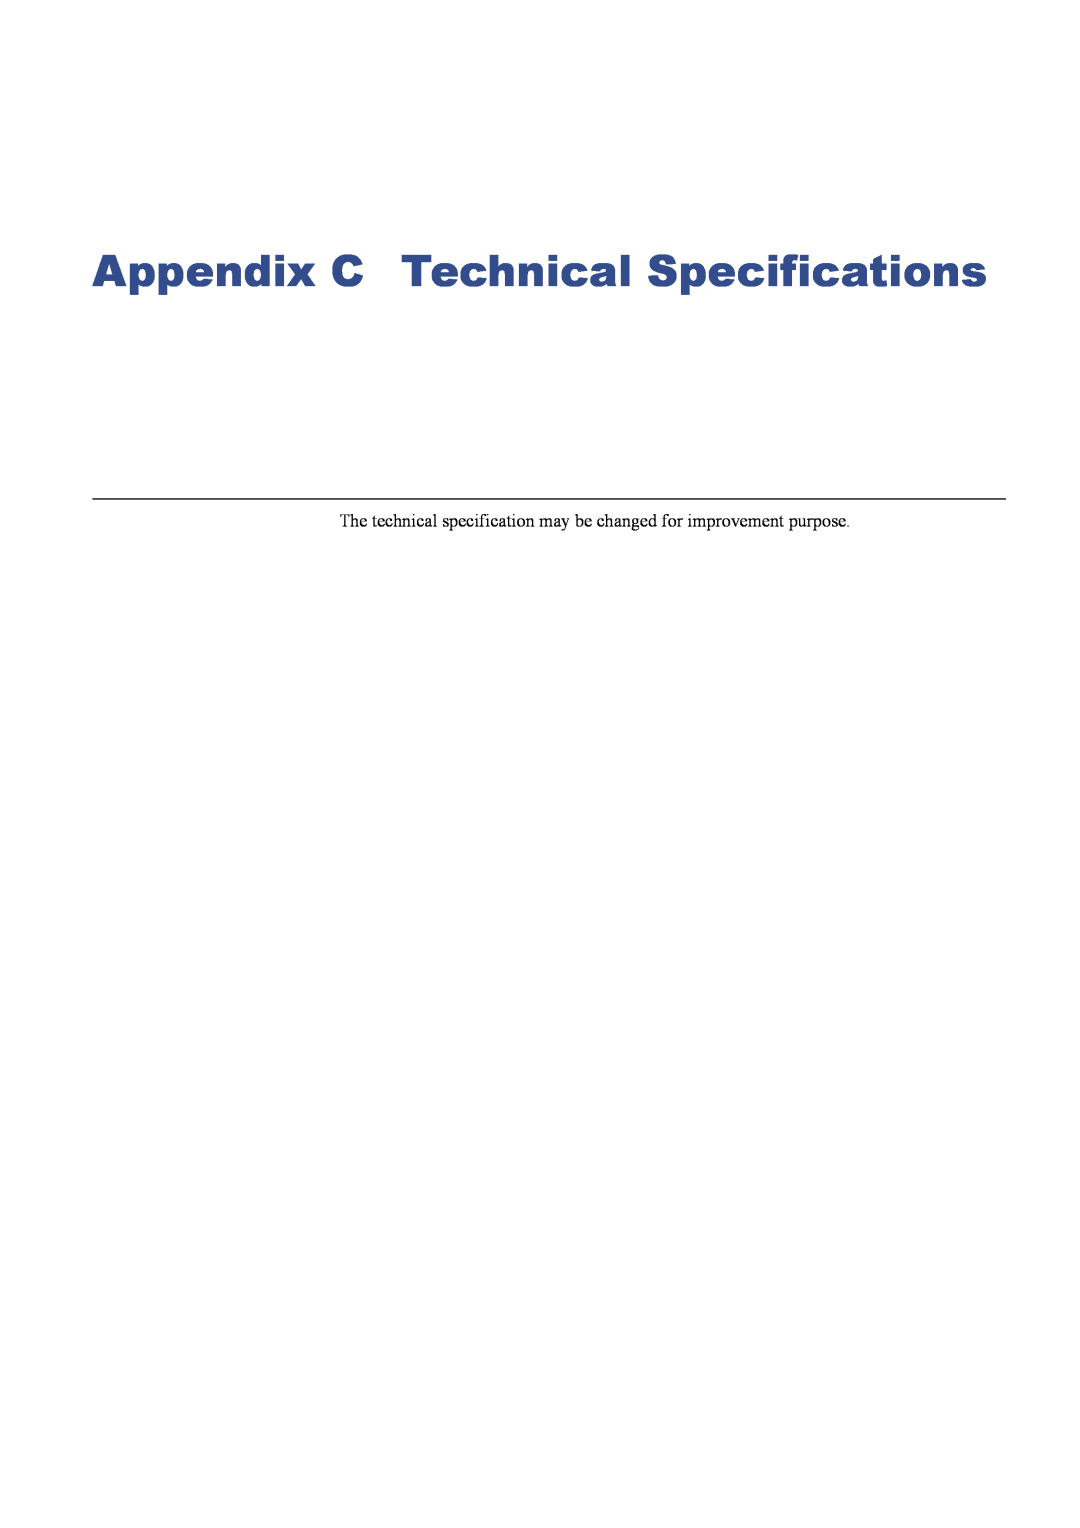 Kyocera C8026N Appendix C Technical Specifications, The technical specification may be changed for improvement purpose 